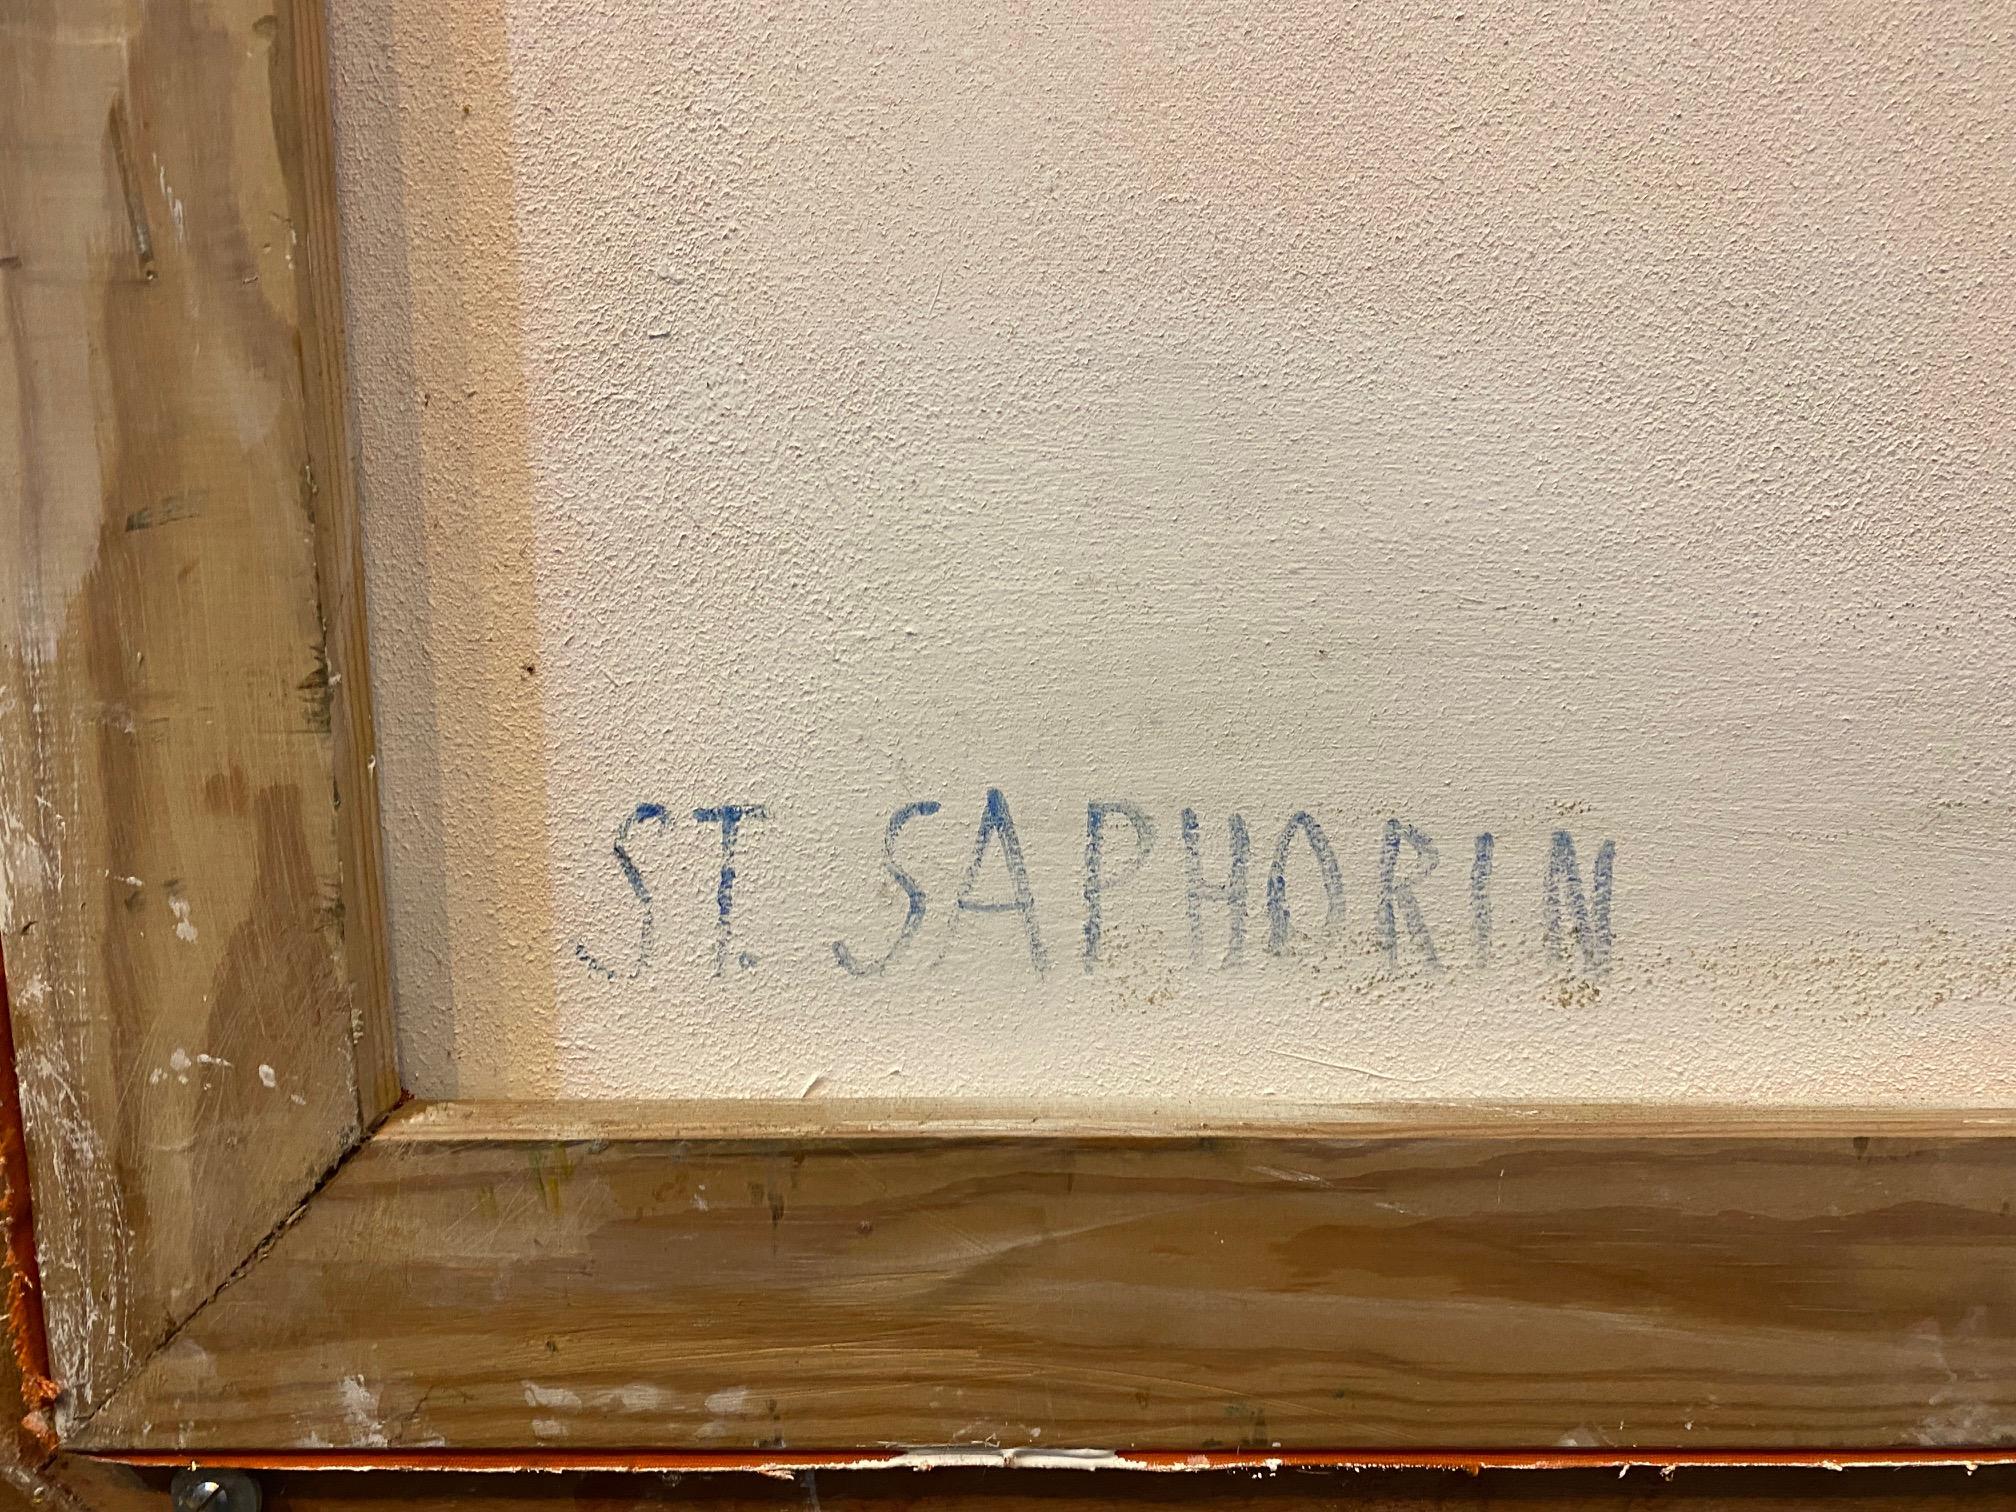 Saint Saphorin, Swiss by Roberto Gherardi - Oil on canvas 82x116 cm 4